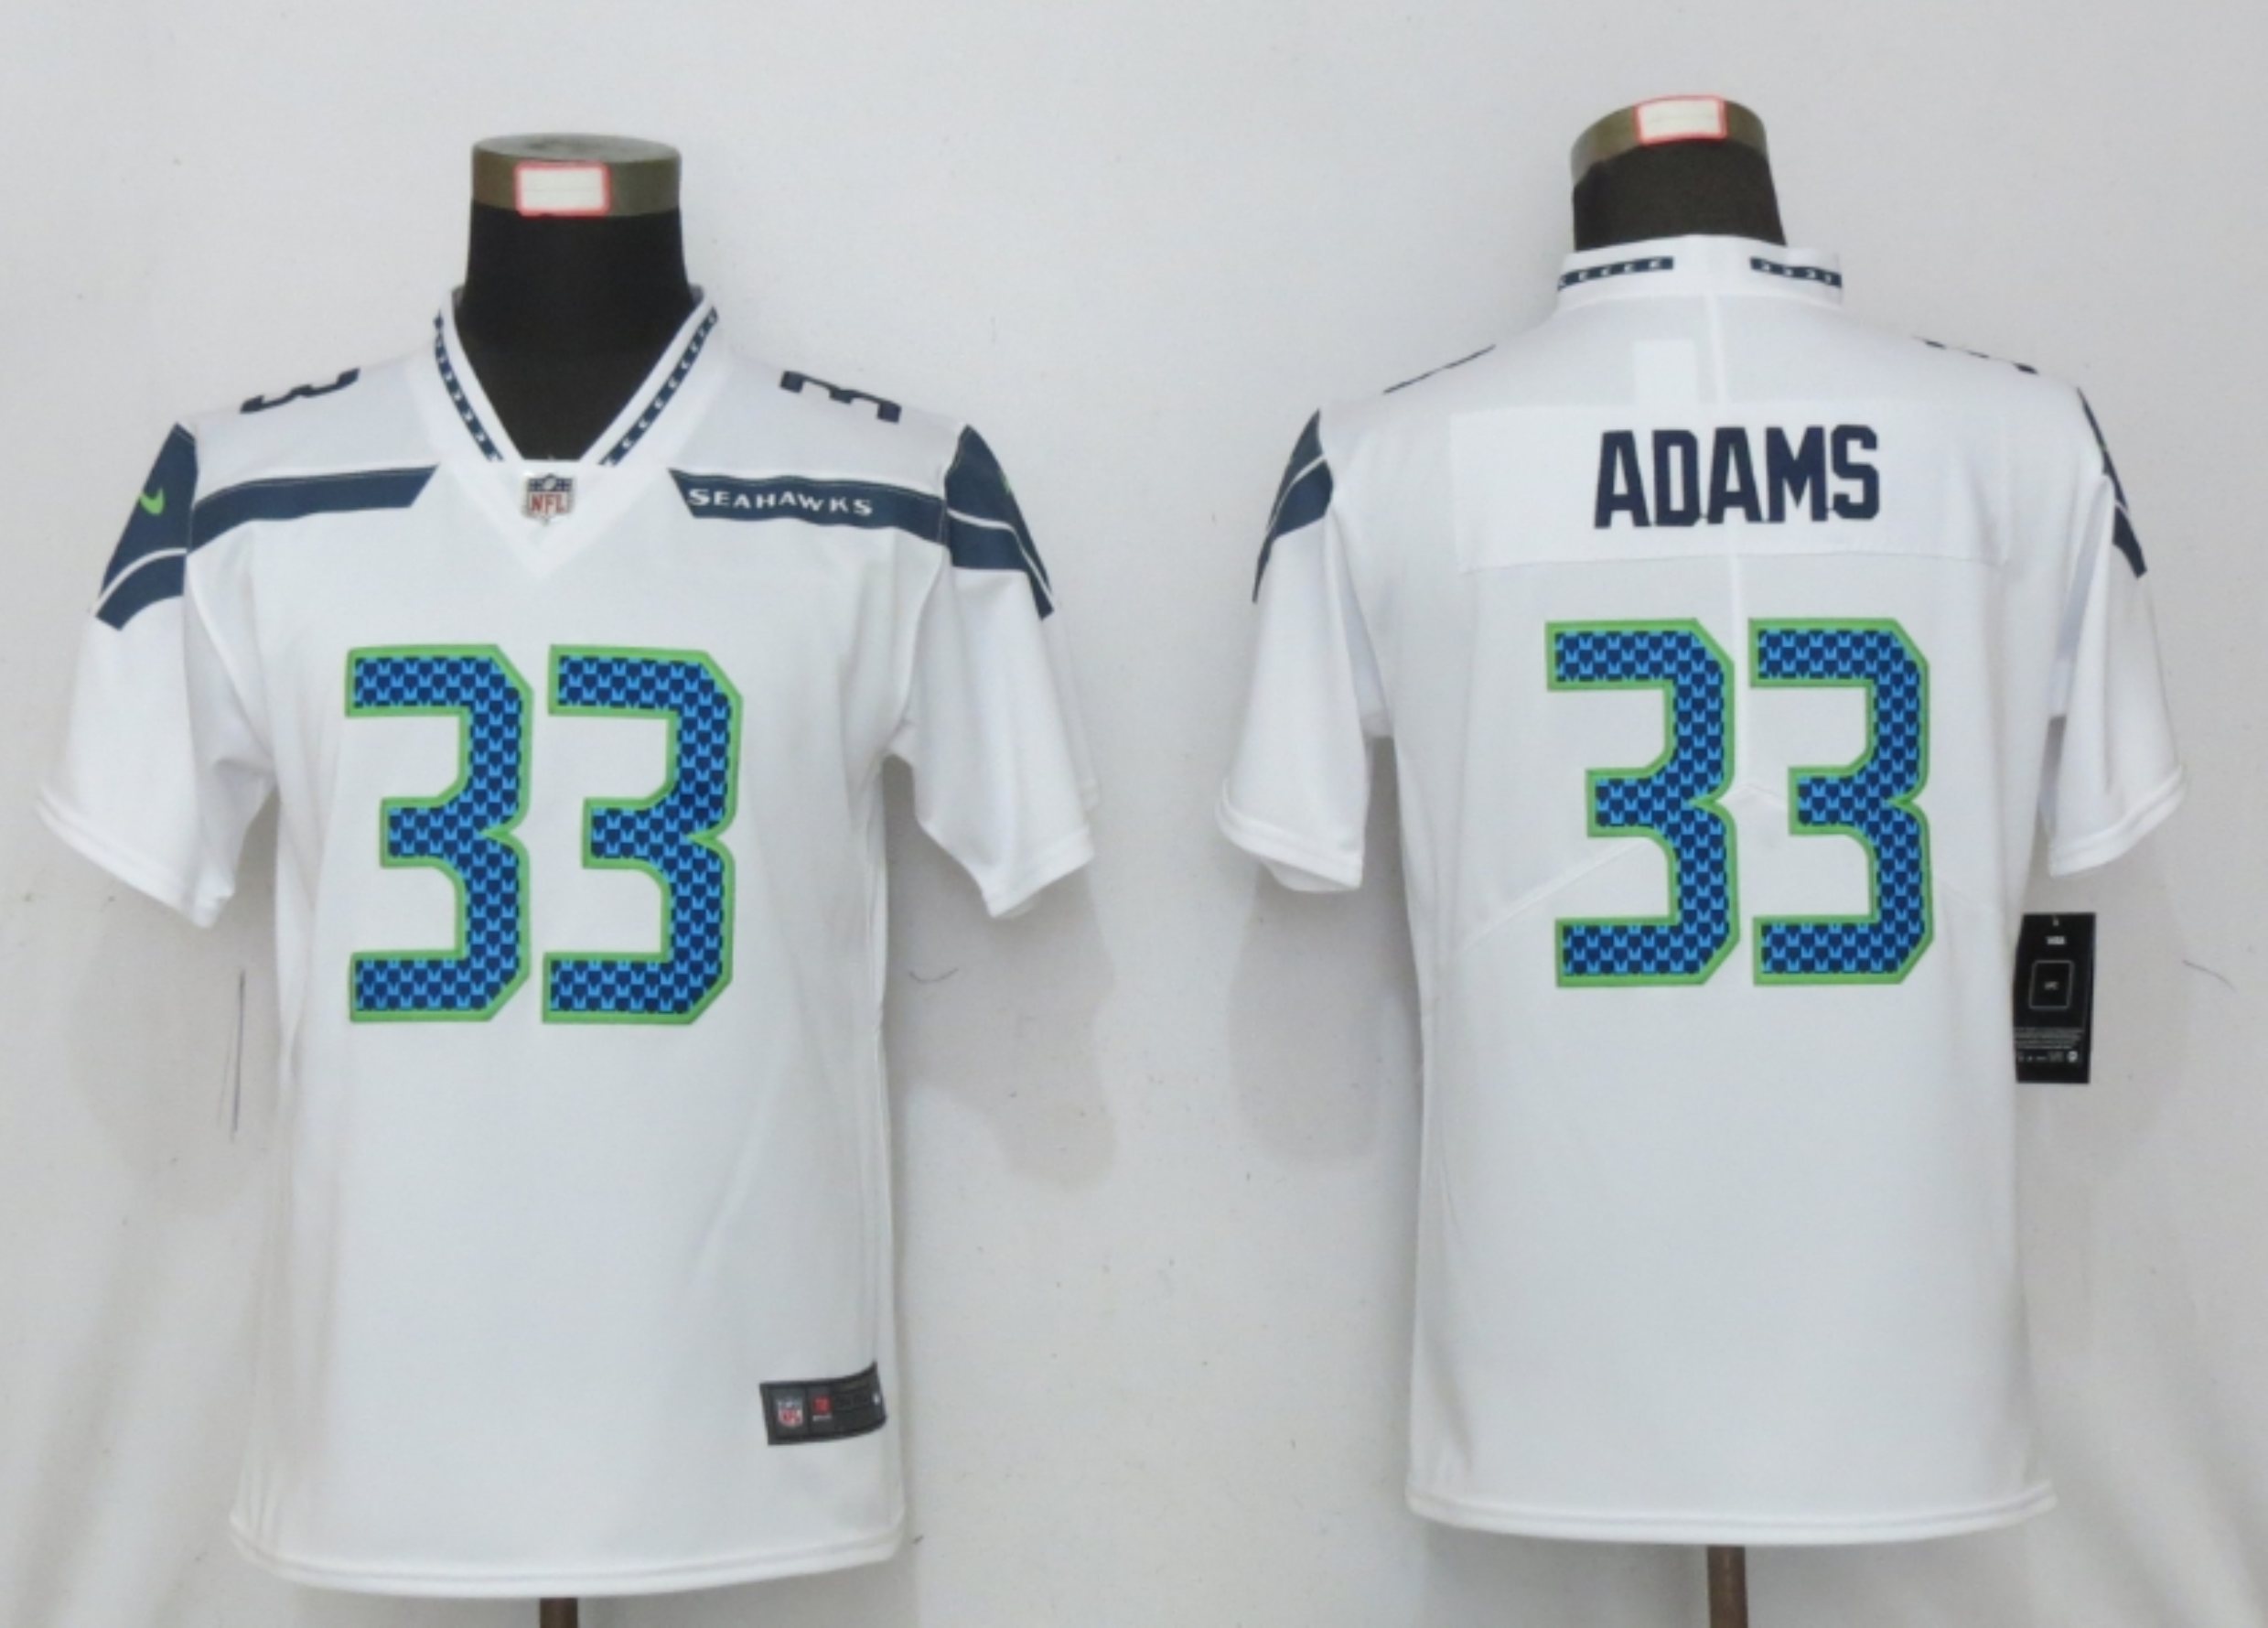 Womens Nike NFL Seattle Seahawks #33 Adams White Vapor Limited White Jersey